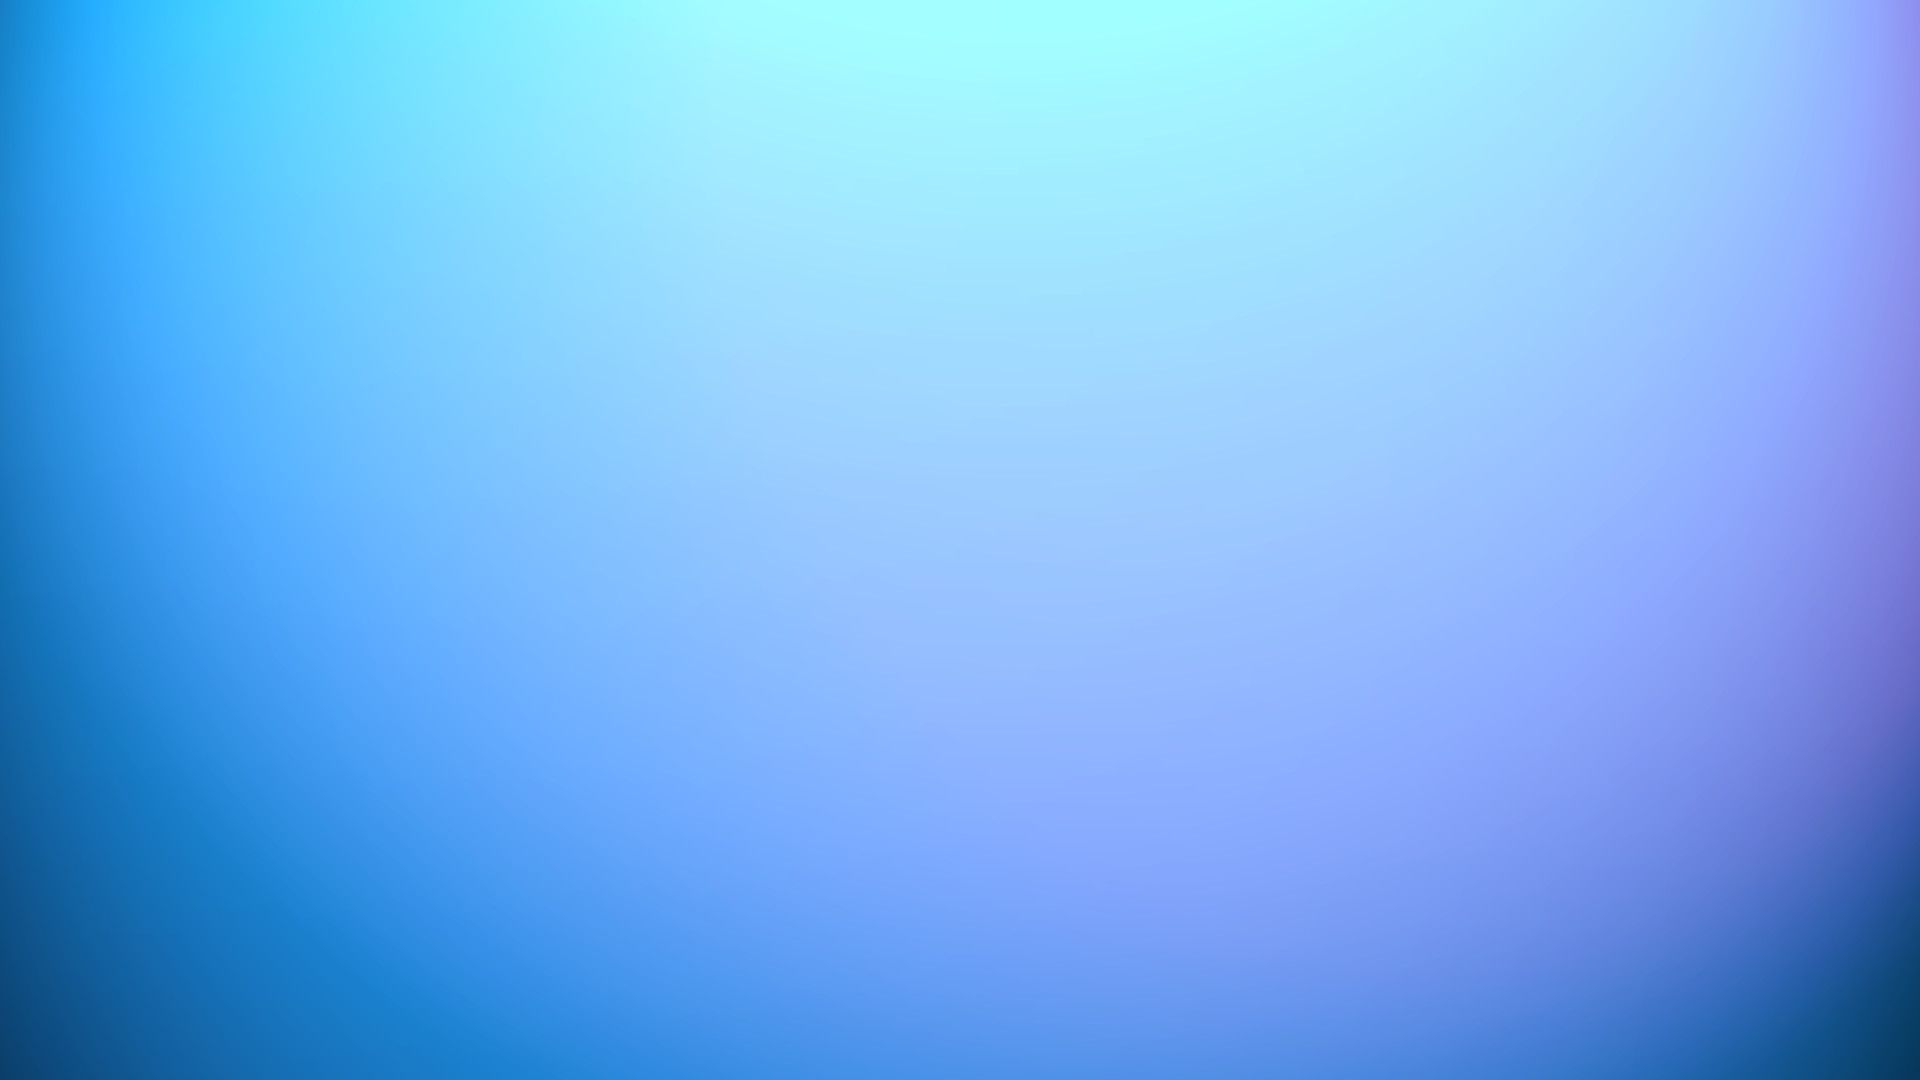 Fondos de pantalla azul degradado - FondosMil